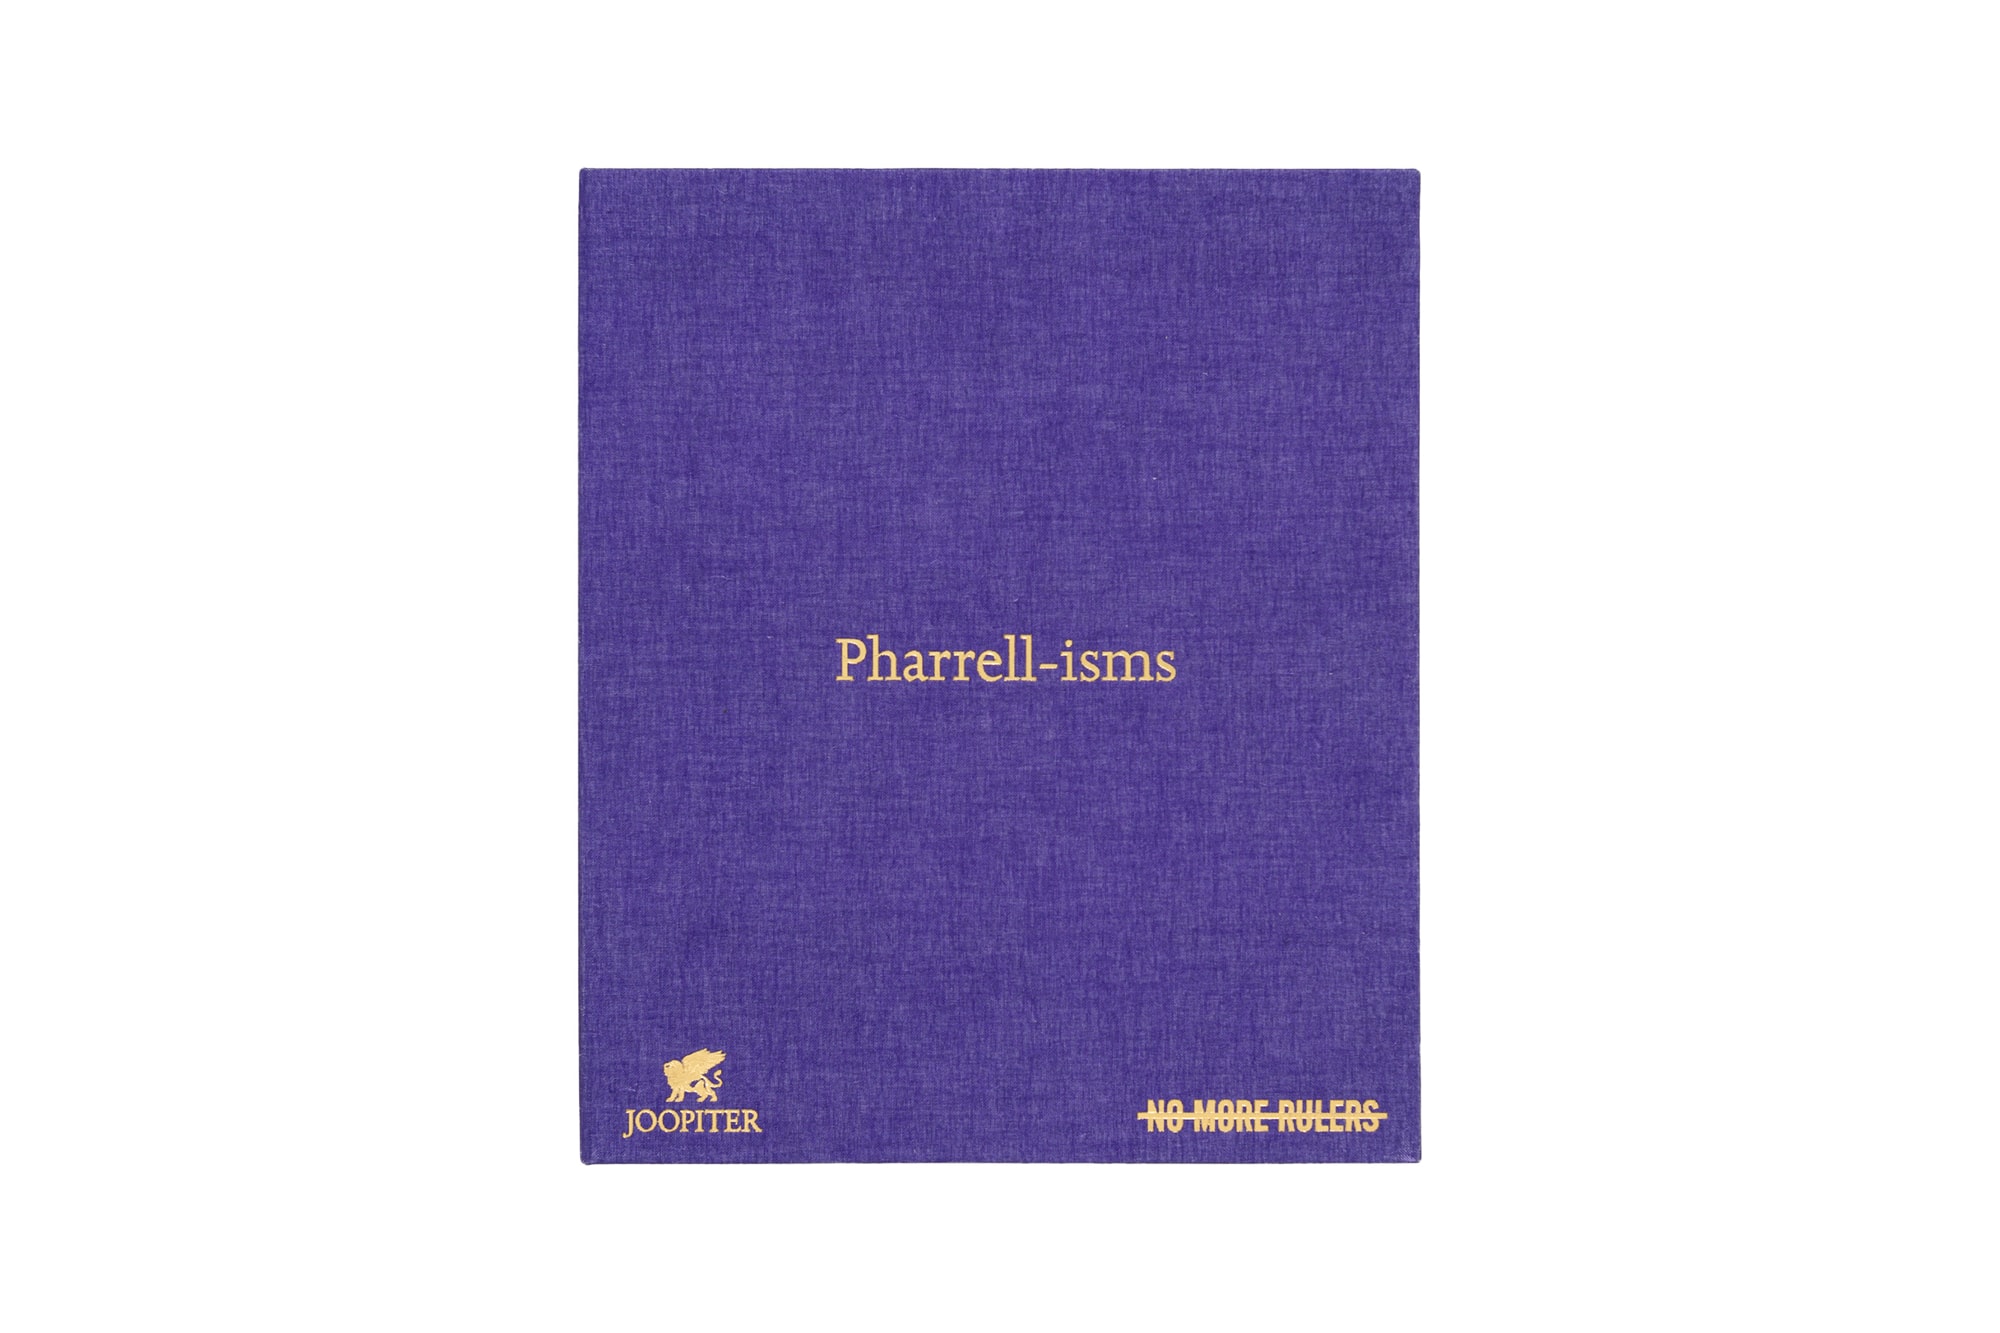 No More Rulers 攜手 Pharrell Williams 合作書籍《Pharrell-isms》正式推出限量盒裝簽名版